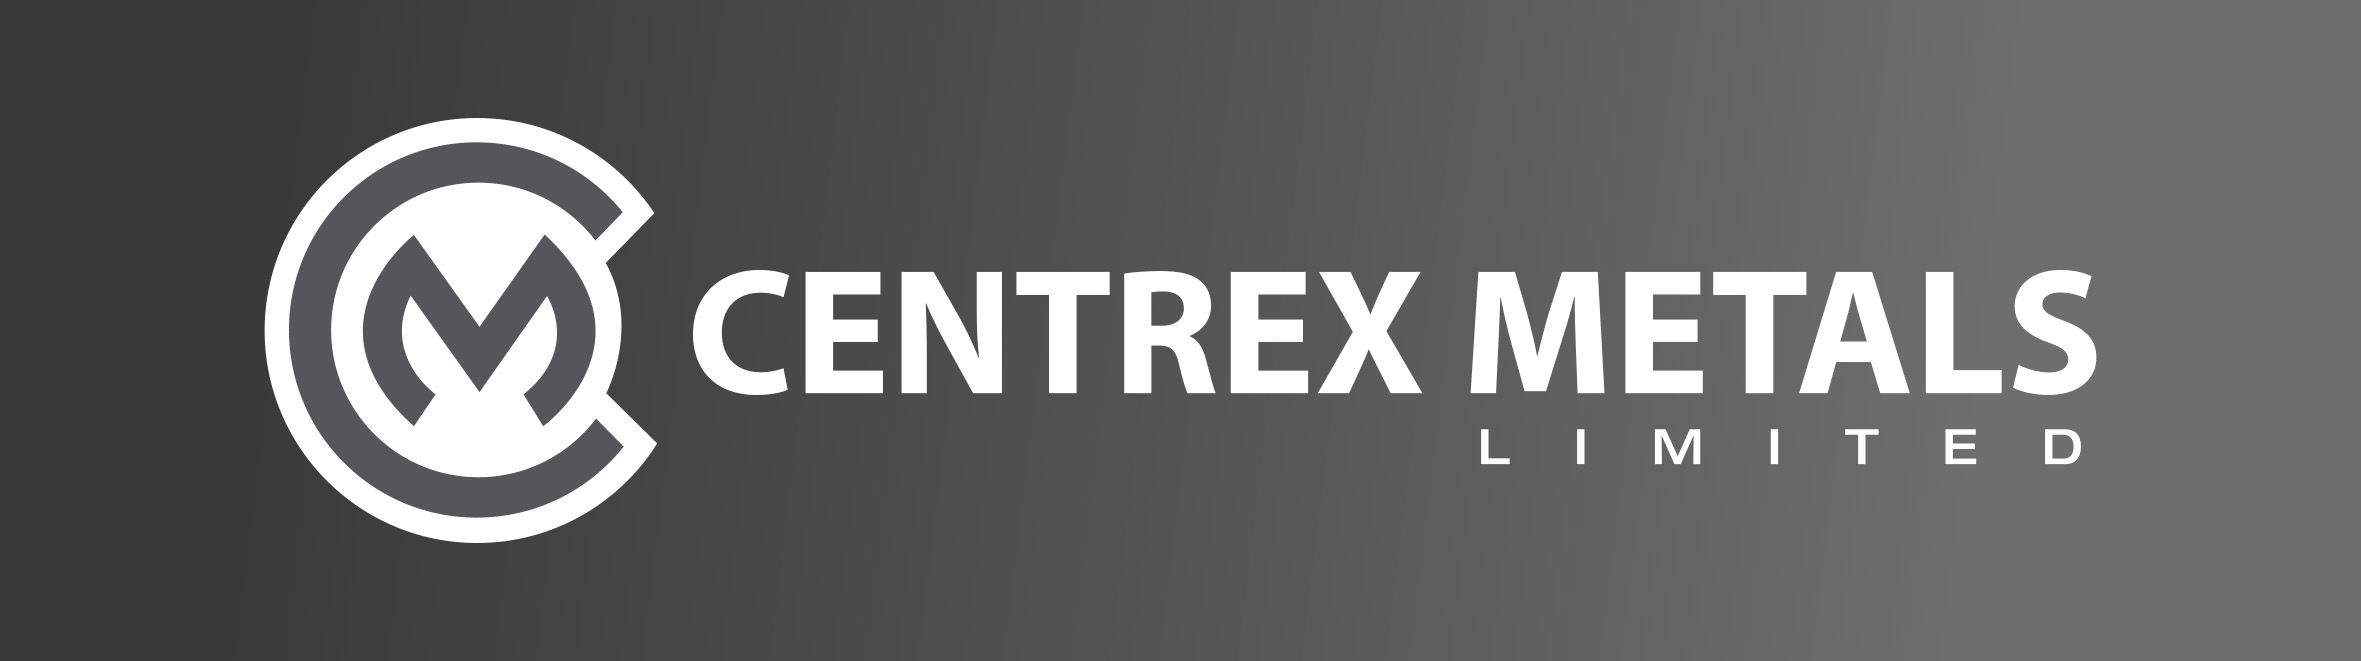 Centrex Metals